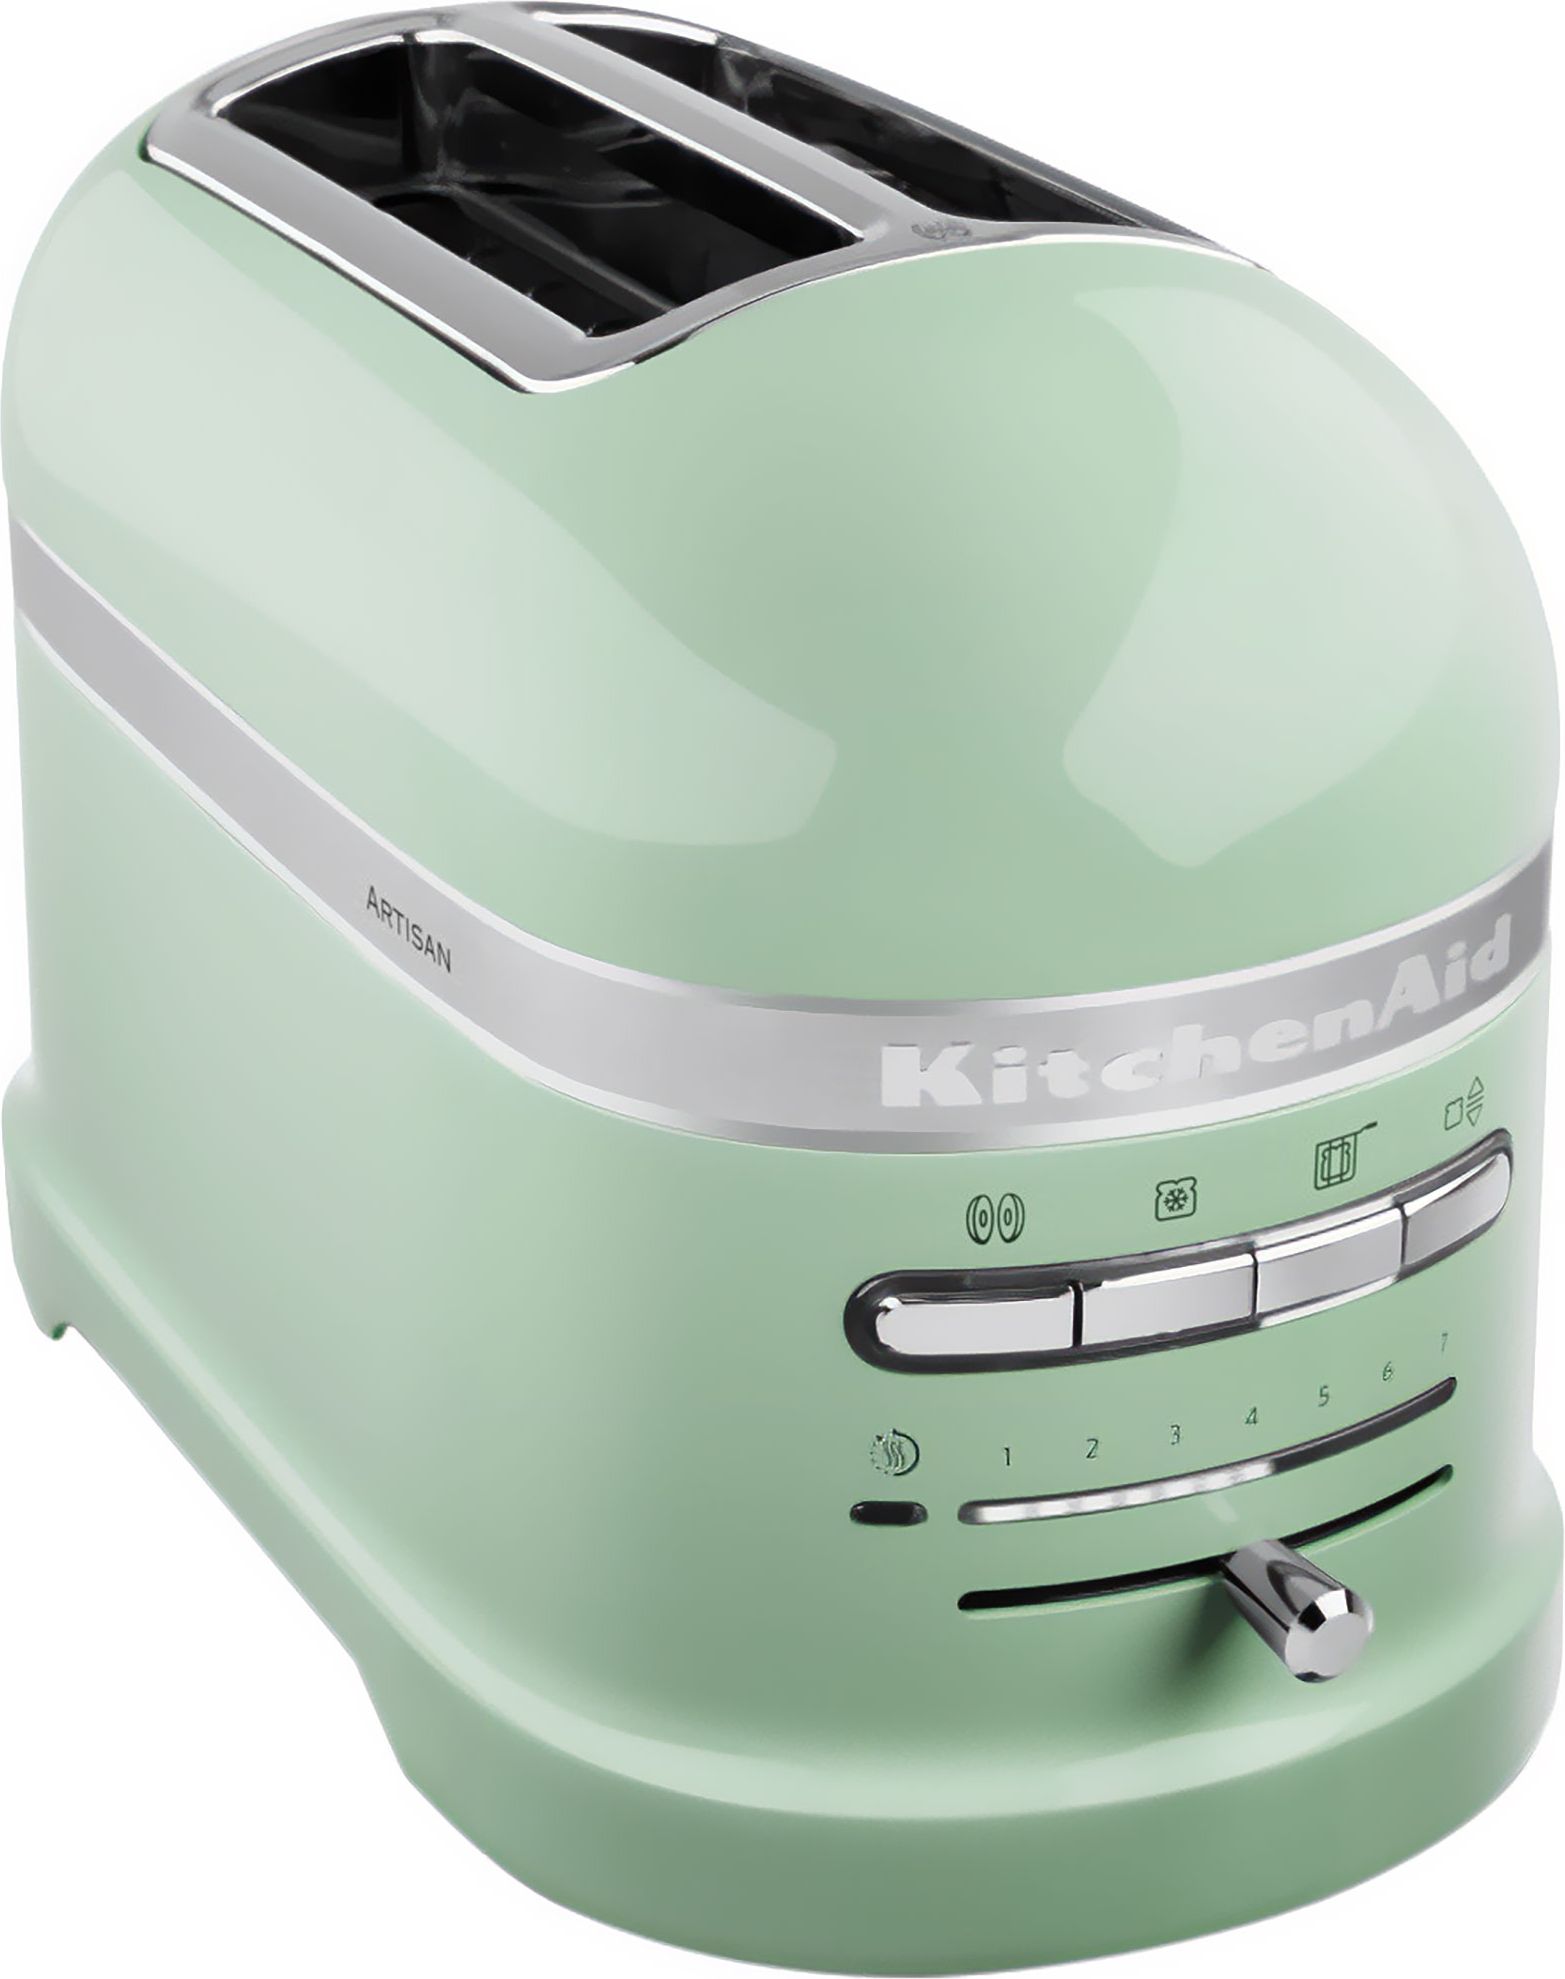 KitchenAid 5KMT2204BPT 2 Slice Toaster - Pistachio, Green